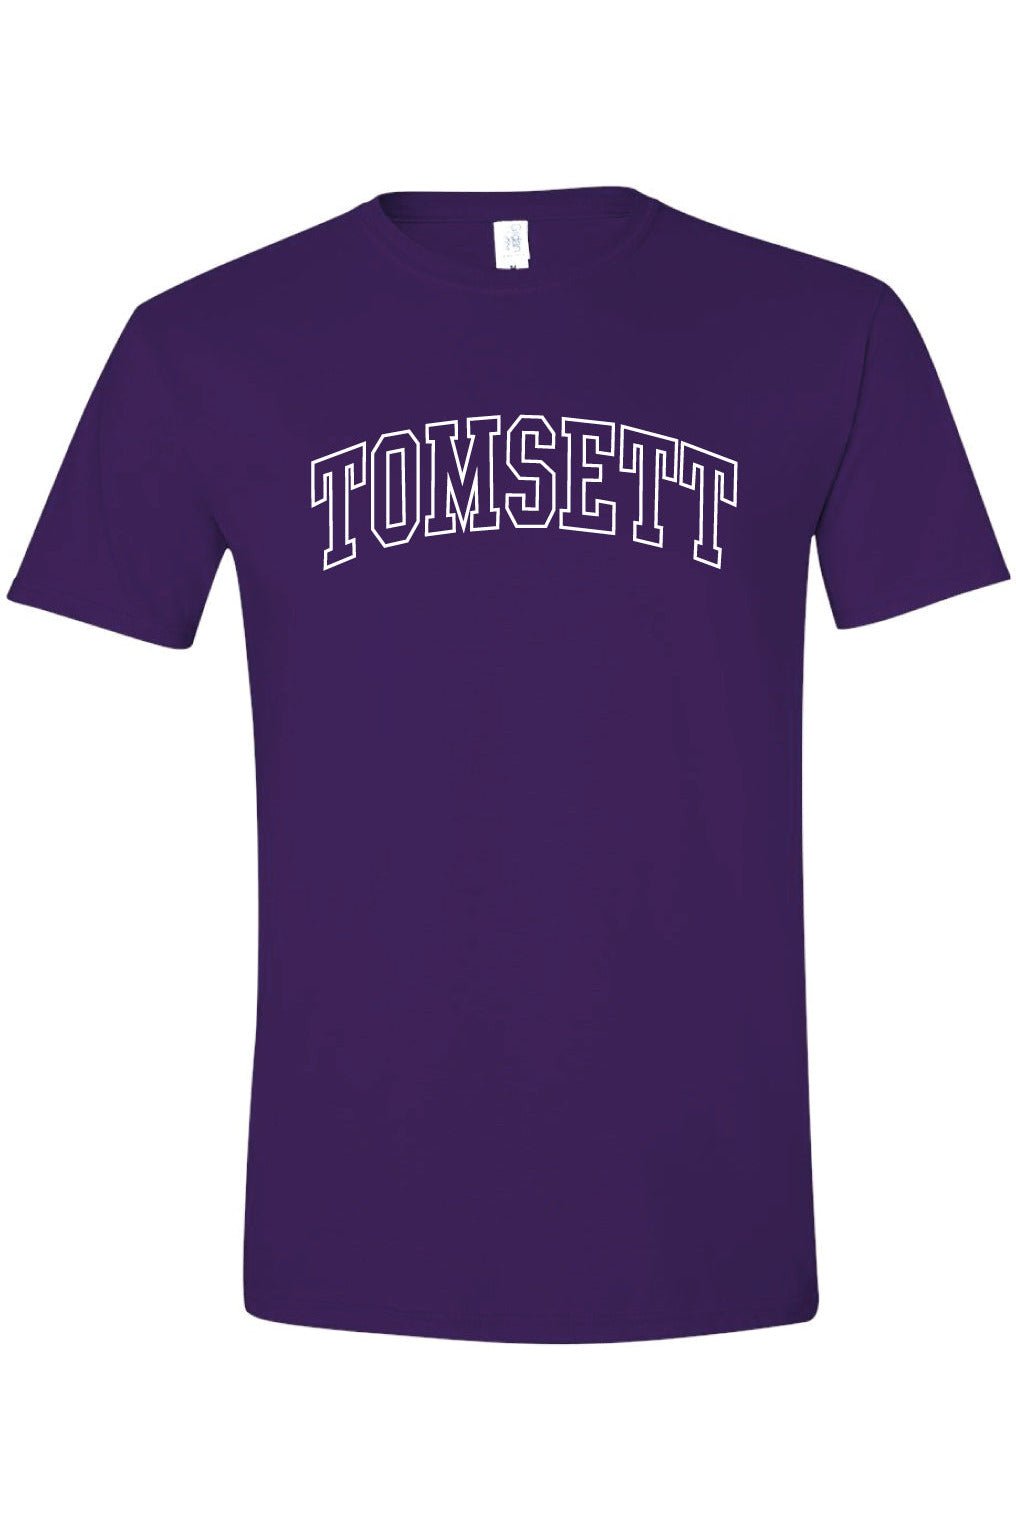 Tomsett T-Shirt - Oddball Workshop